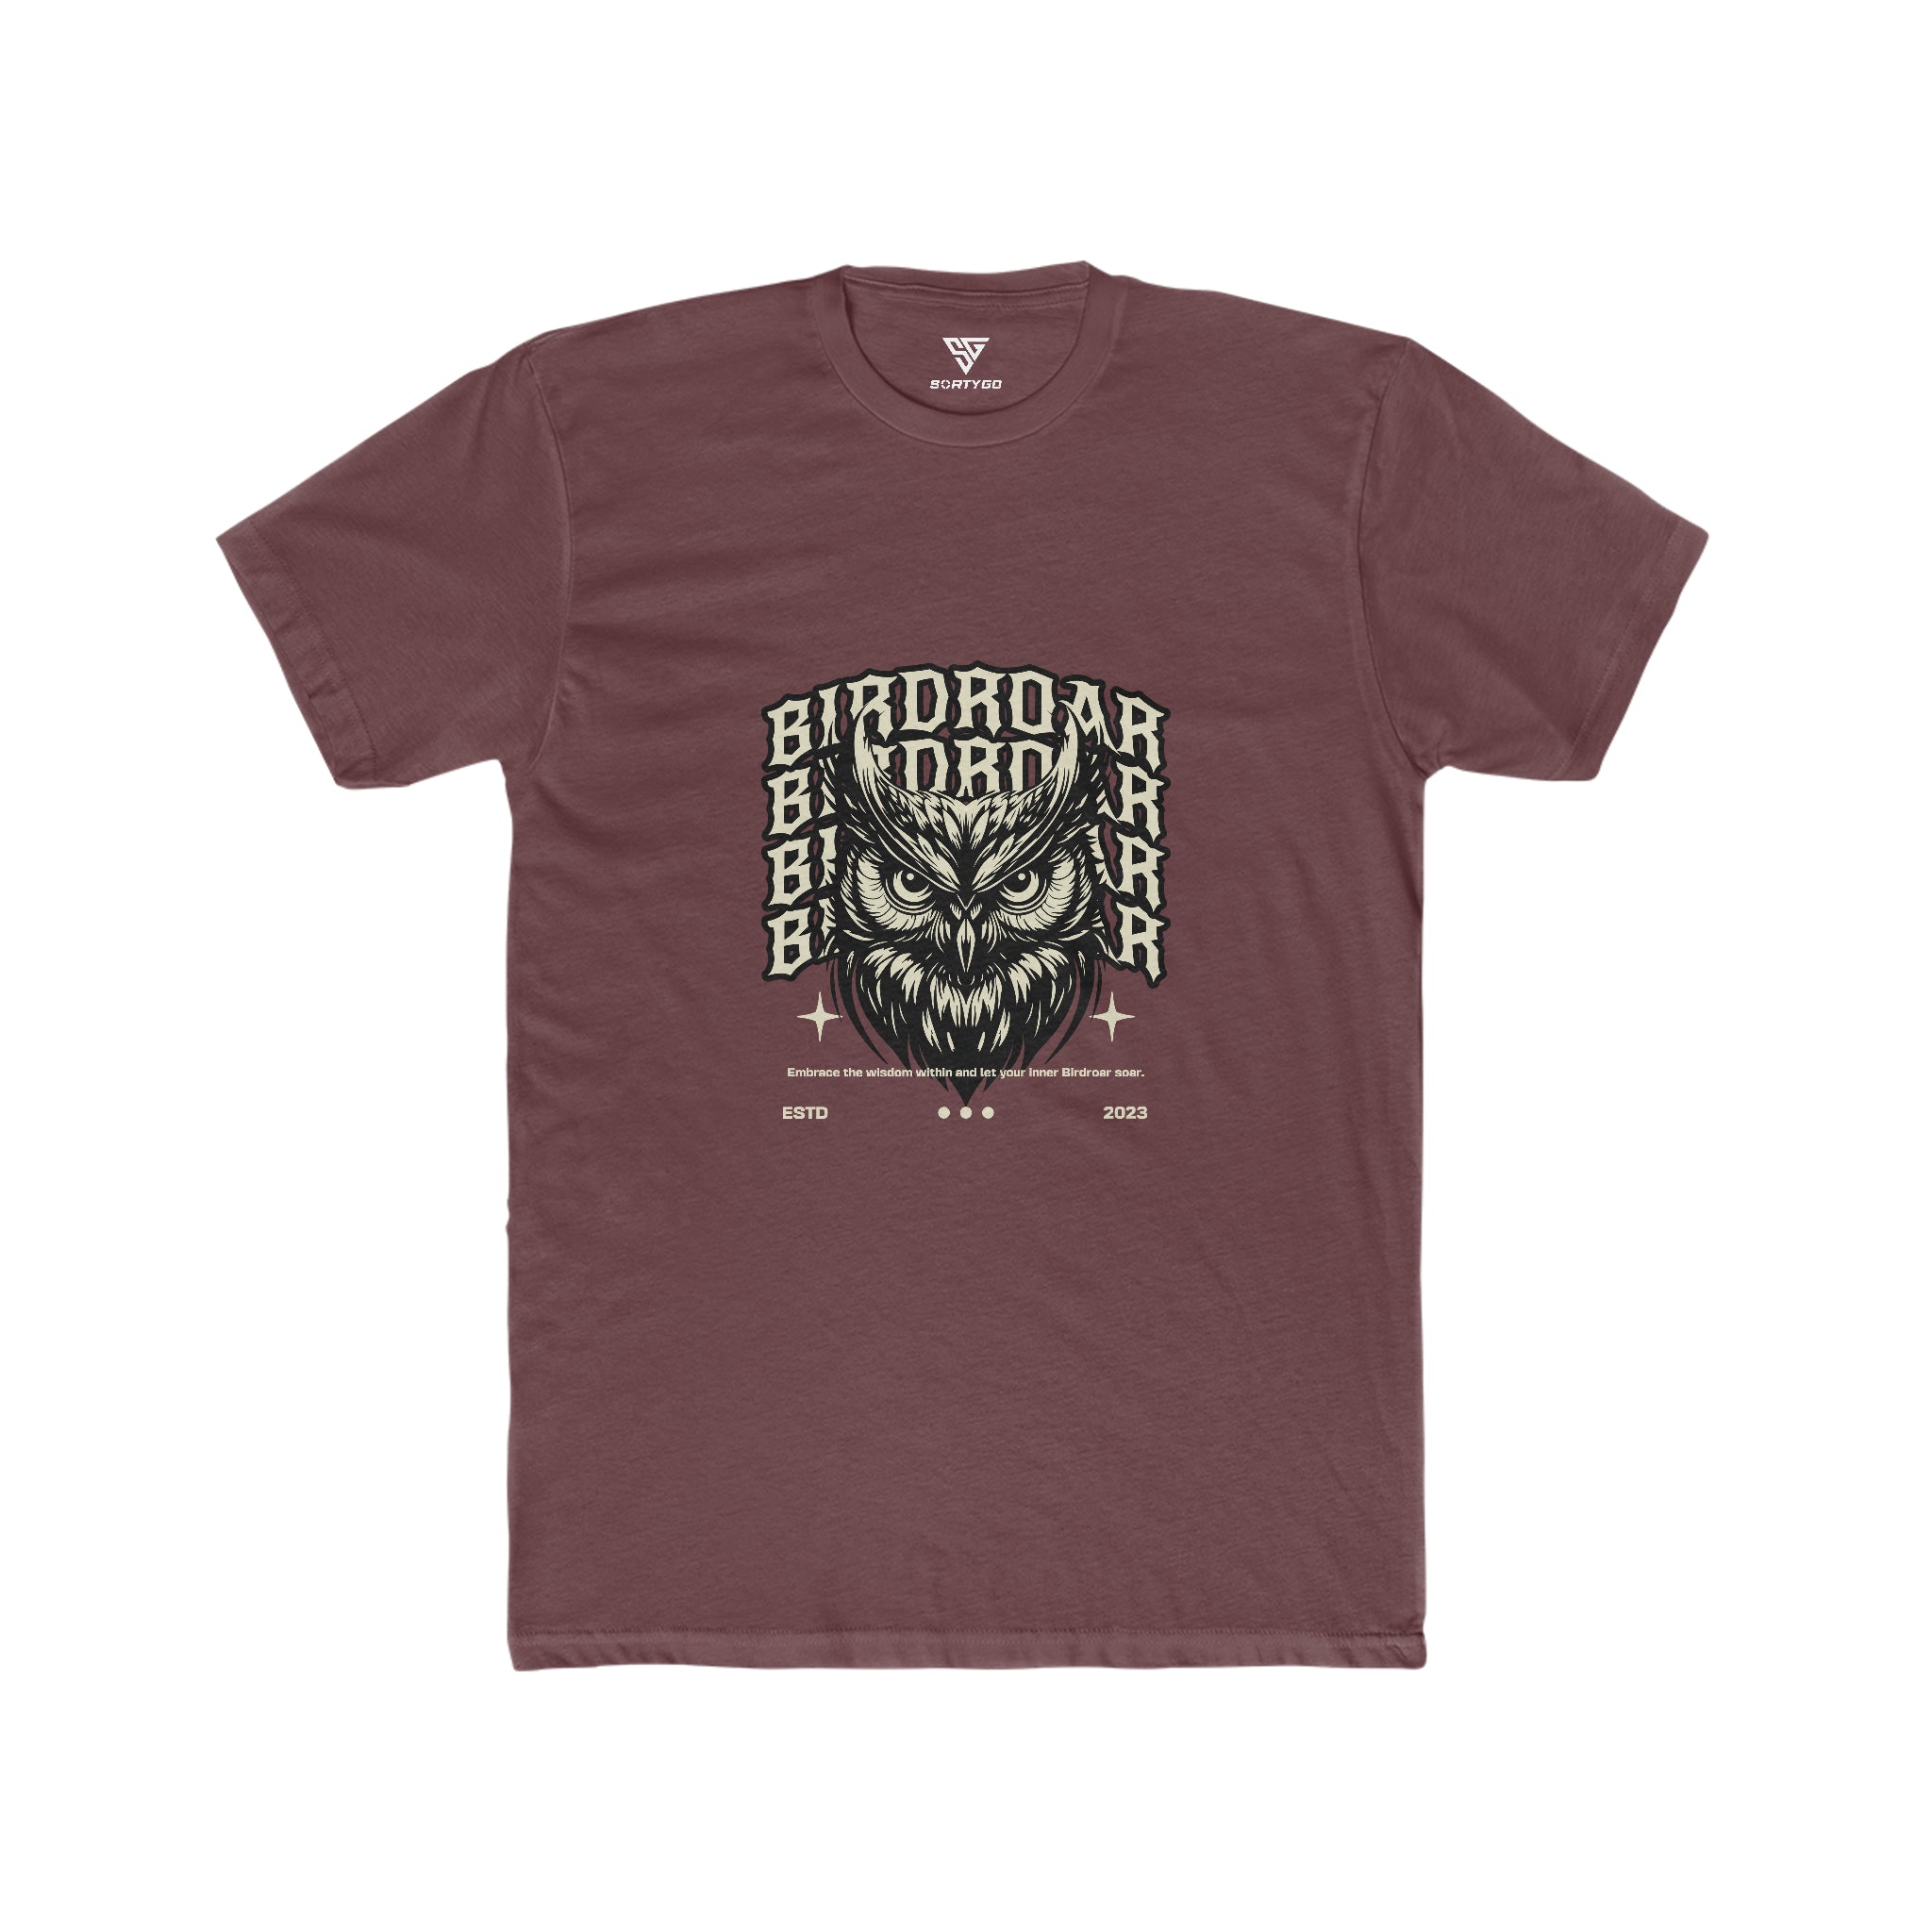 SORTYGO - Birdroar Men Fitted T-Shirt in Solid Maroon